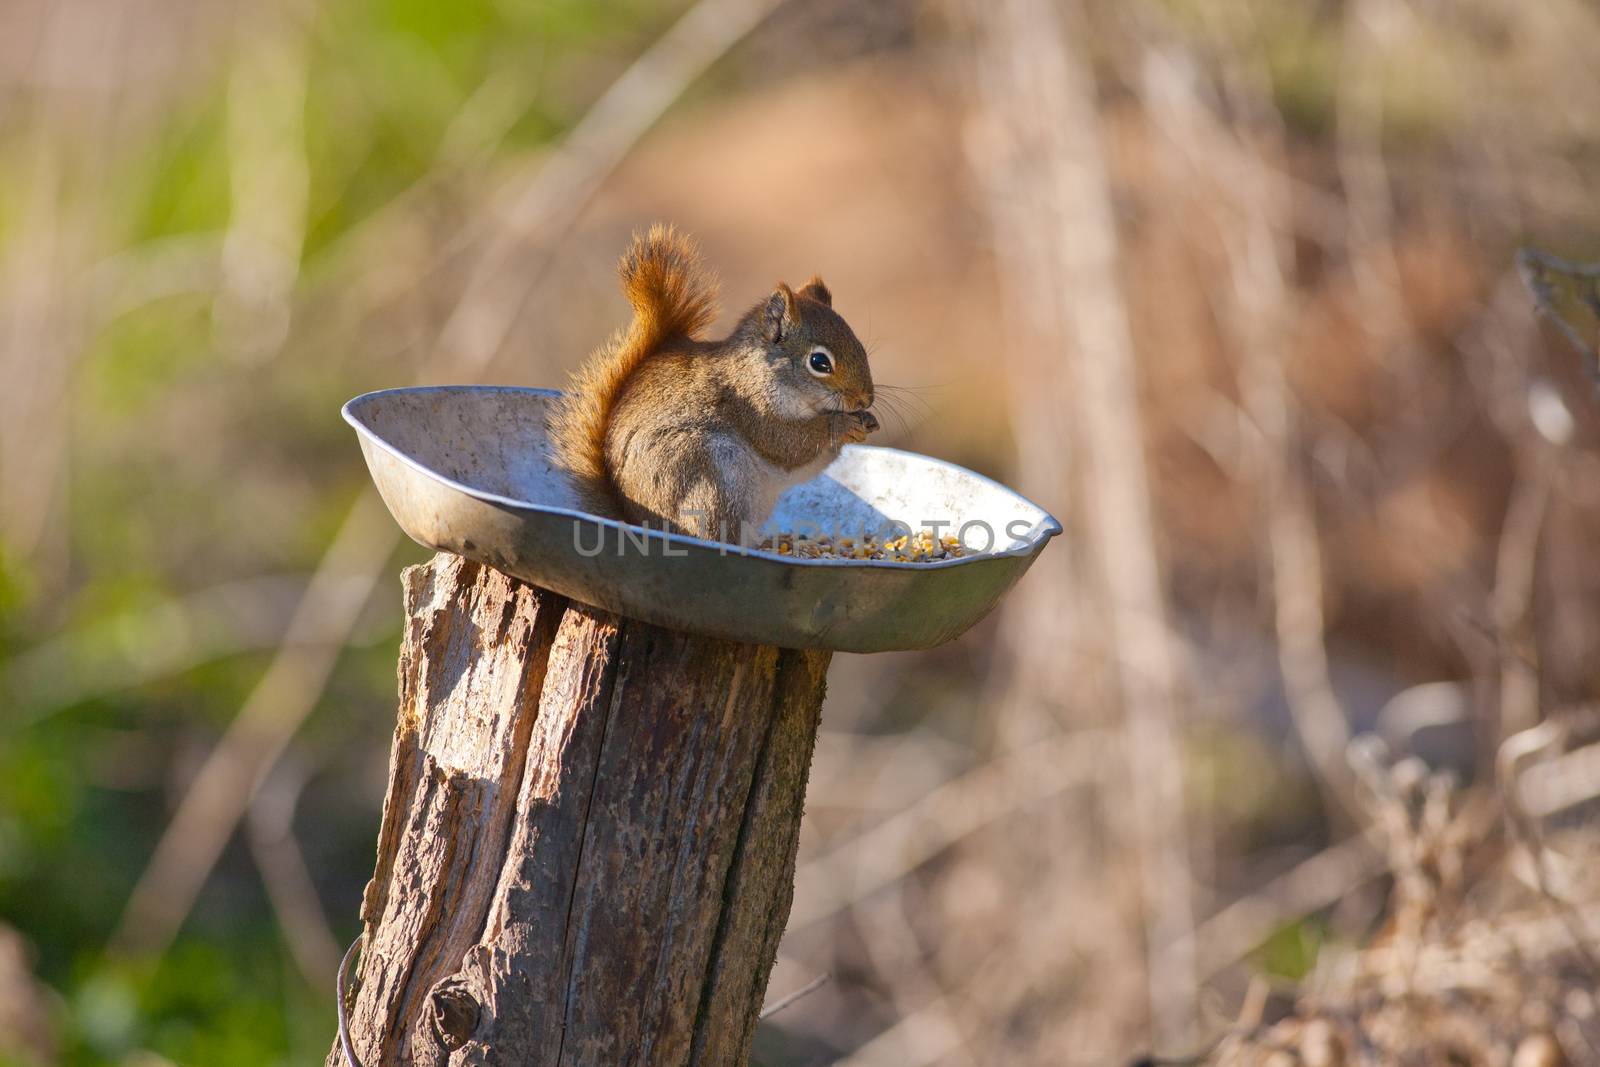 Canadian squirrel eating outdoors - fall season